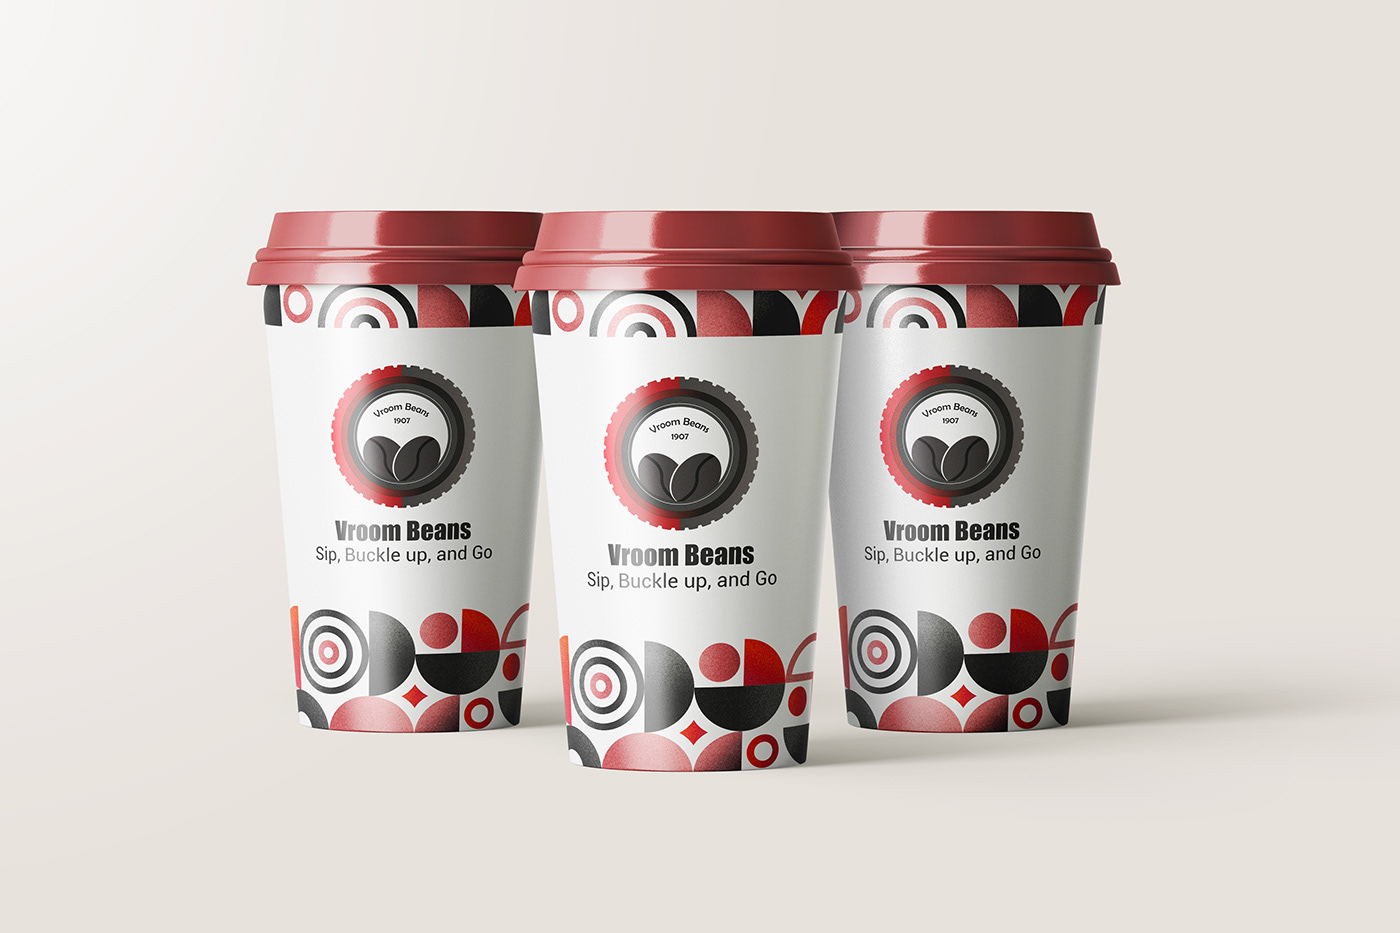 Coffee coffee shop brand identity Logo Design visual identity Advertising  Mockup Packaging logo Logotype